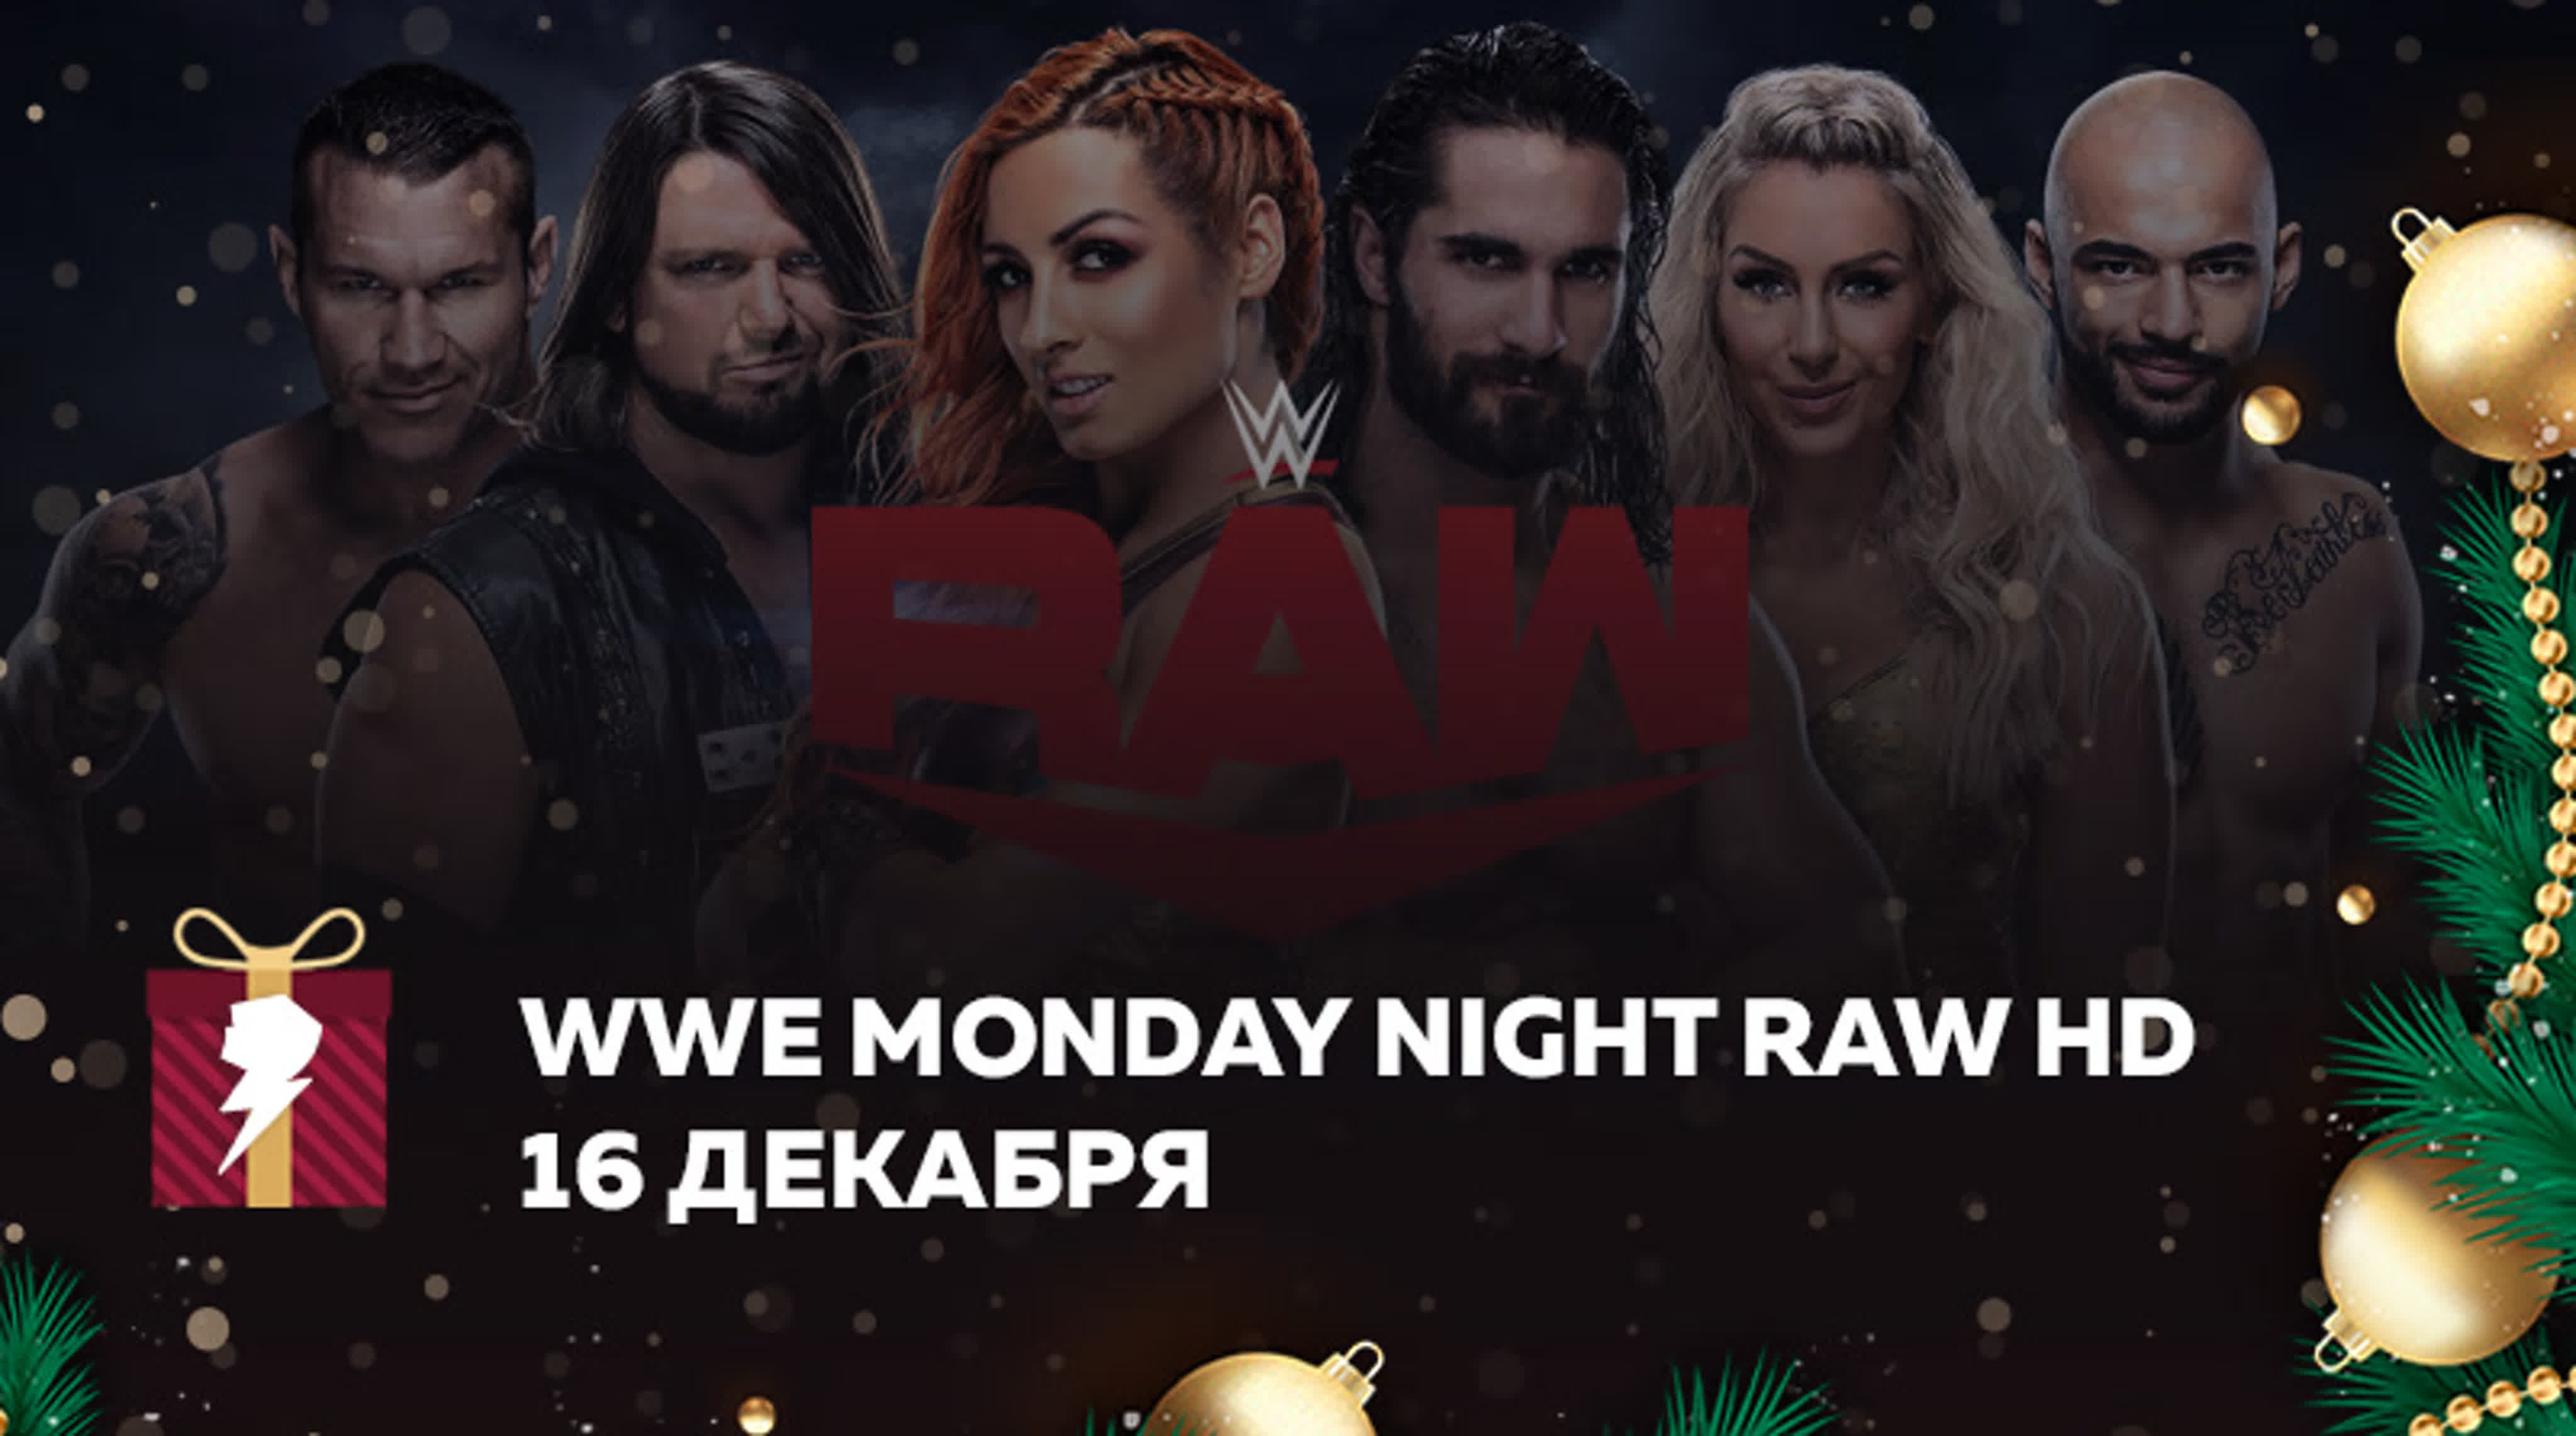 [#My1Event] WWE Monday Night RAW